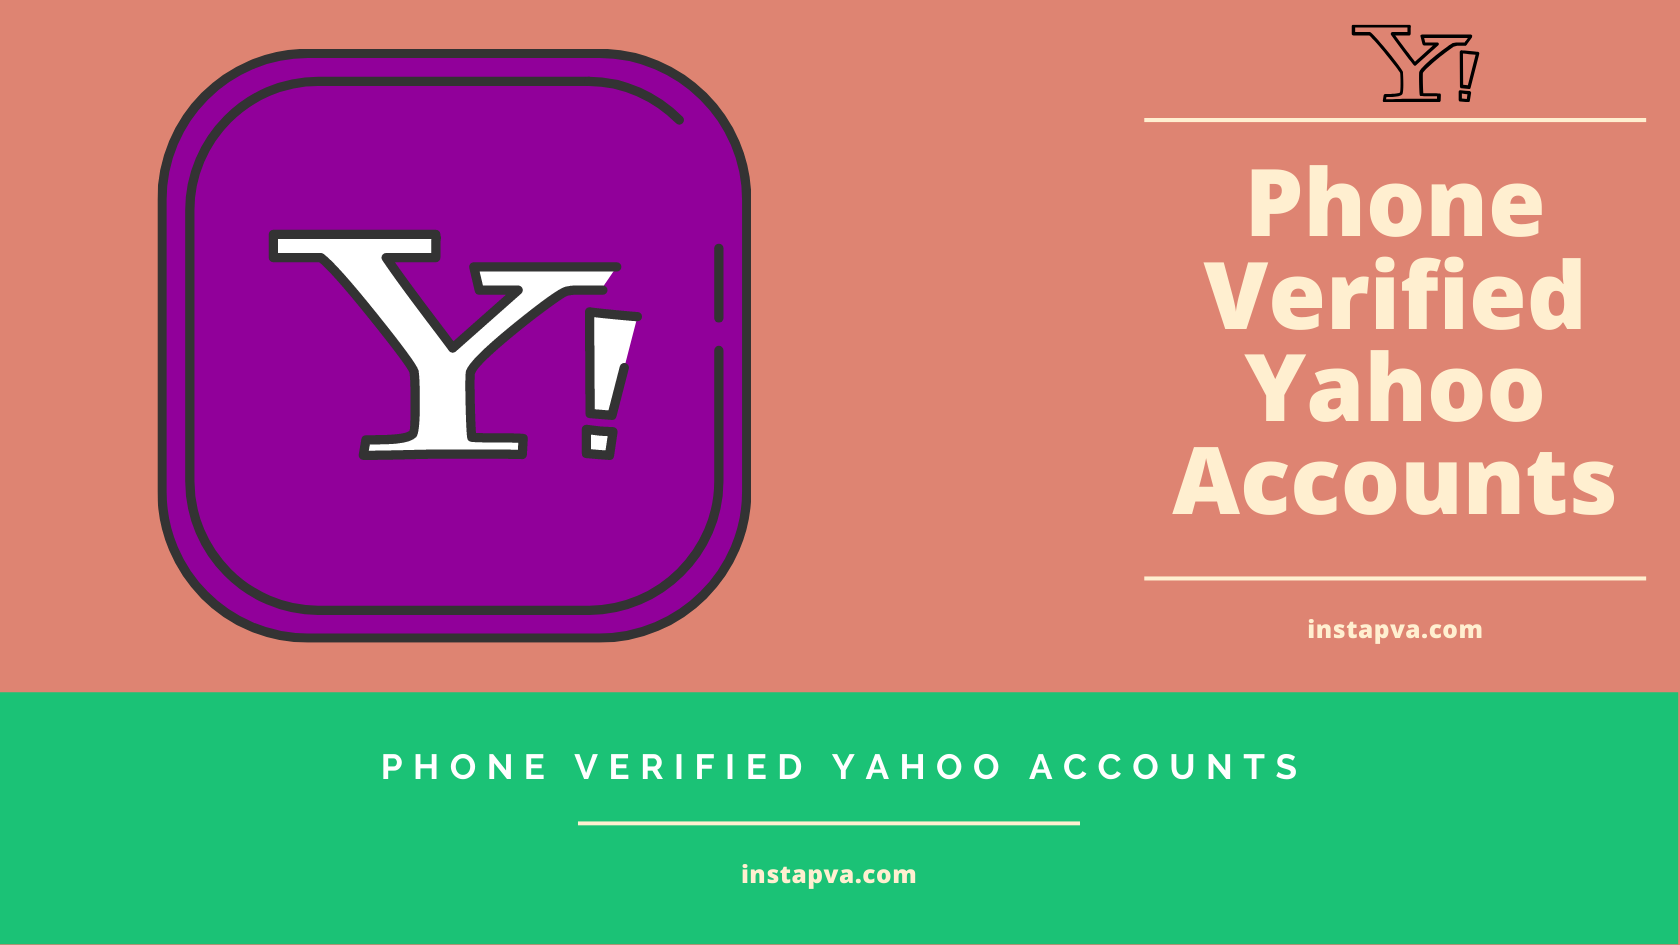 Phone Verified Yahoo Accounts